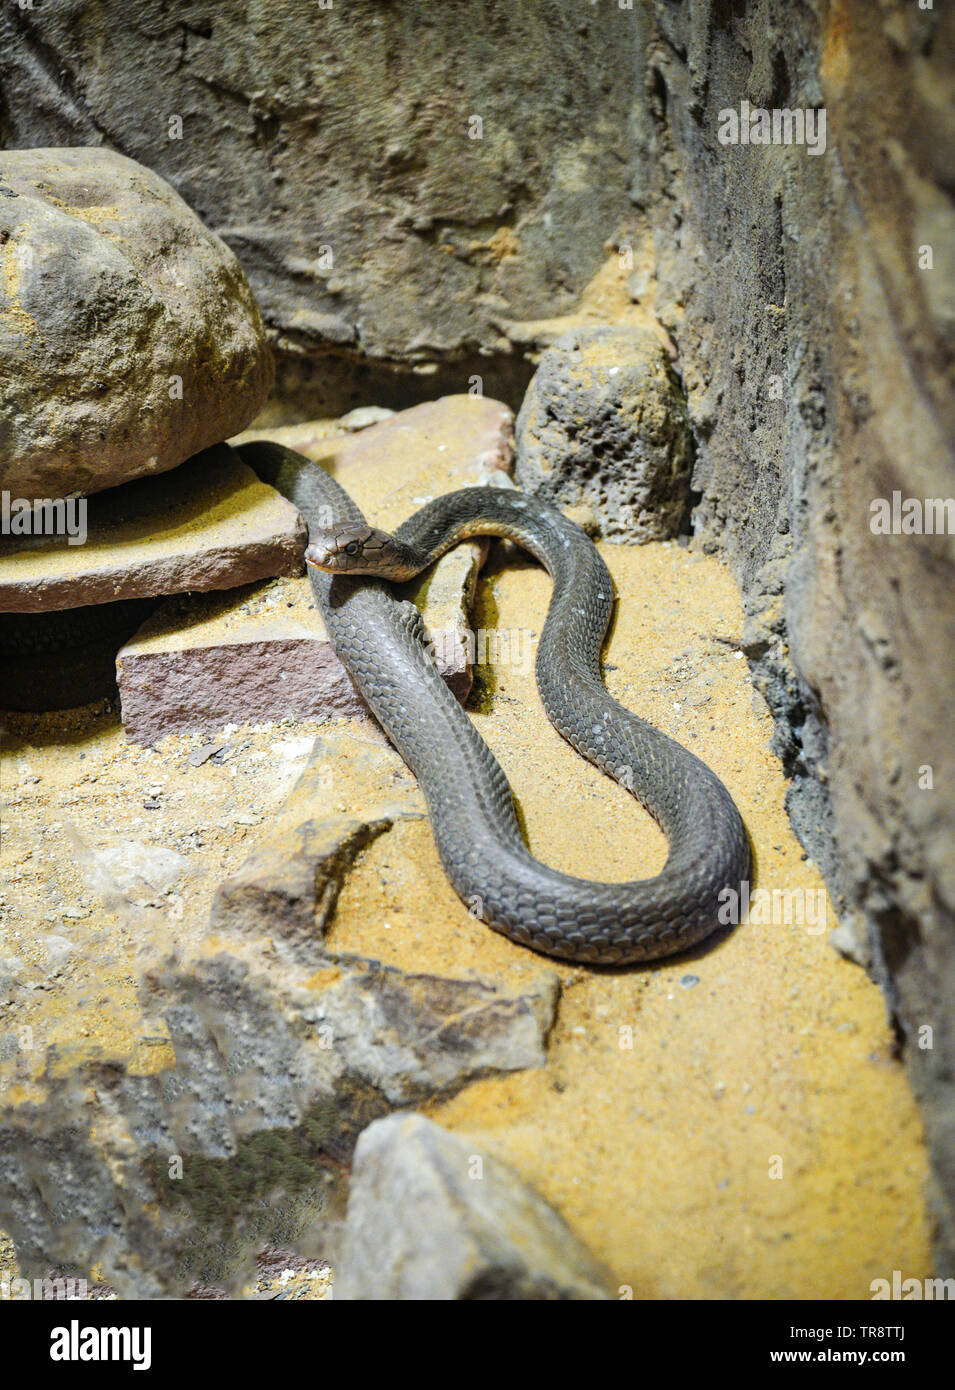 King cobra lying on the rock ground / Ophiophagus hannah Stock Photo